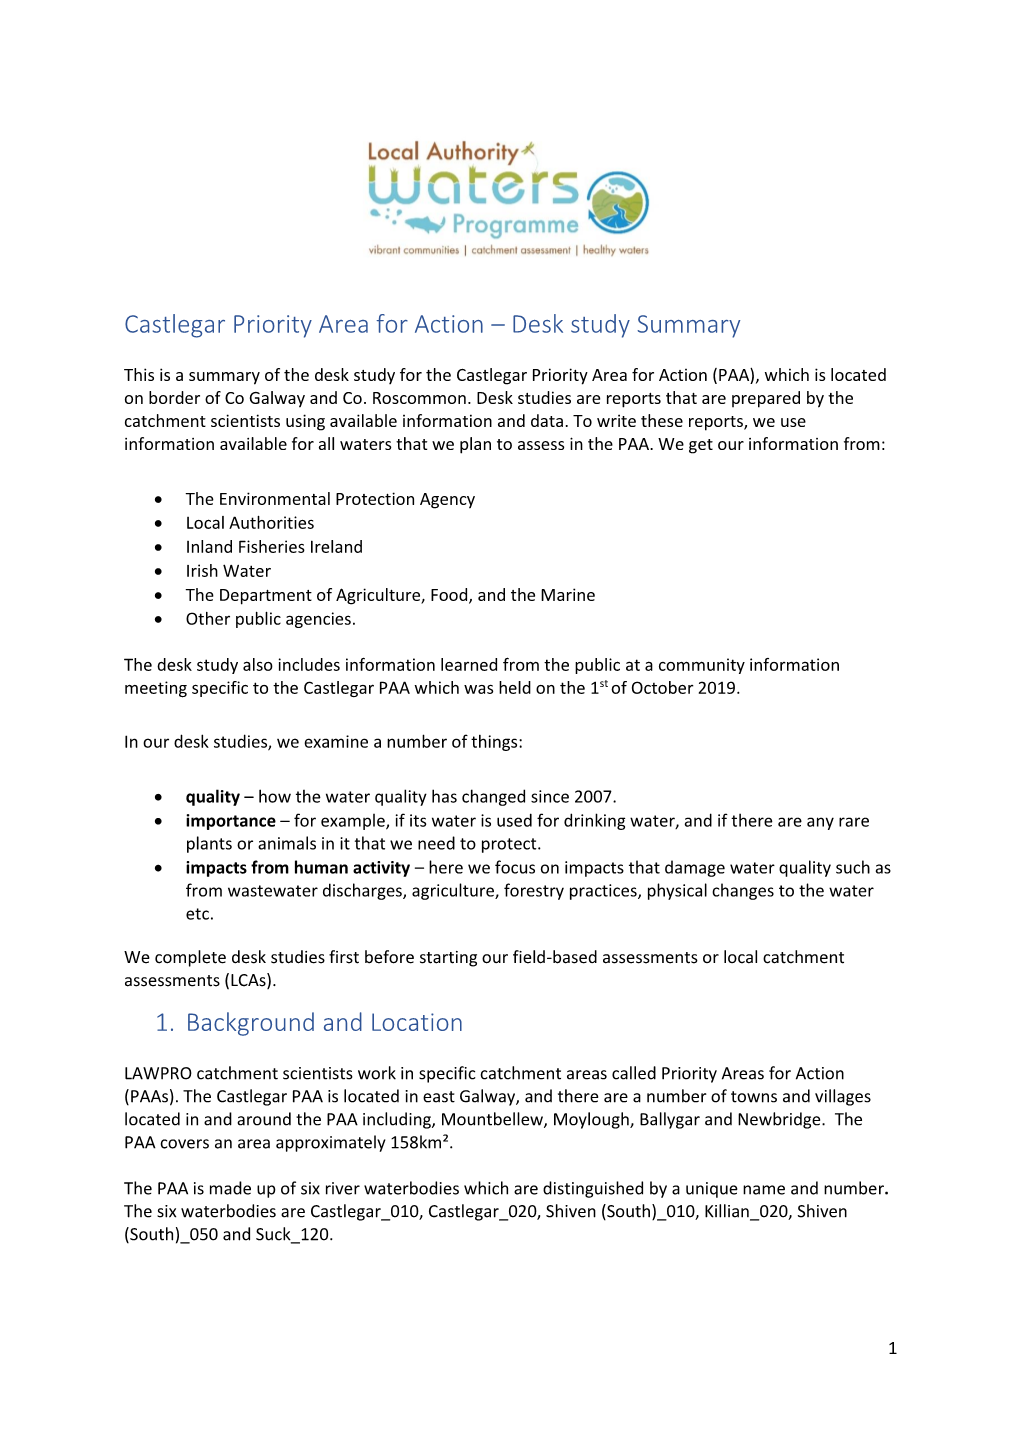 Castlegar Priority Area for Action – Desk Study Summary